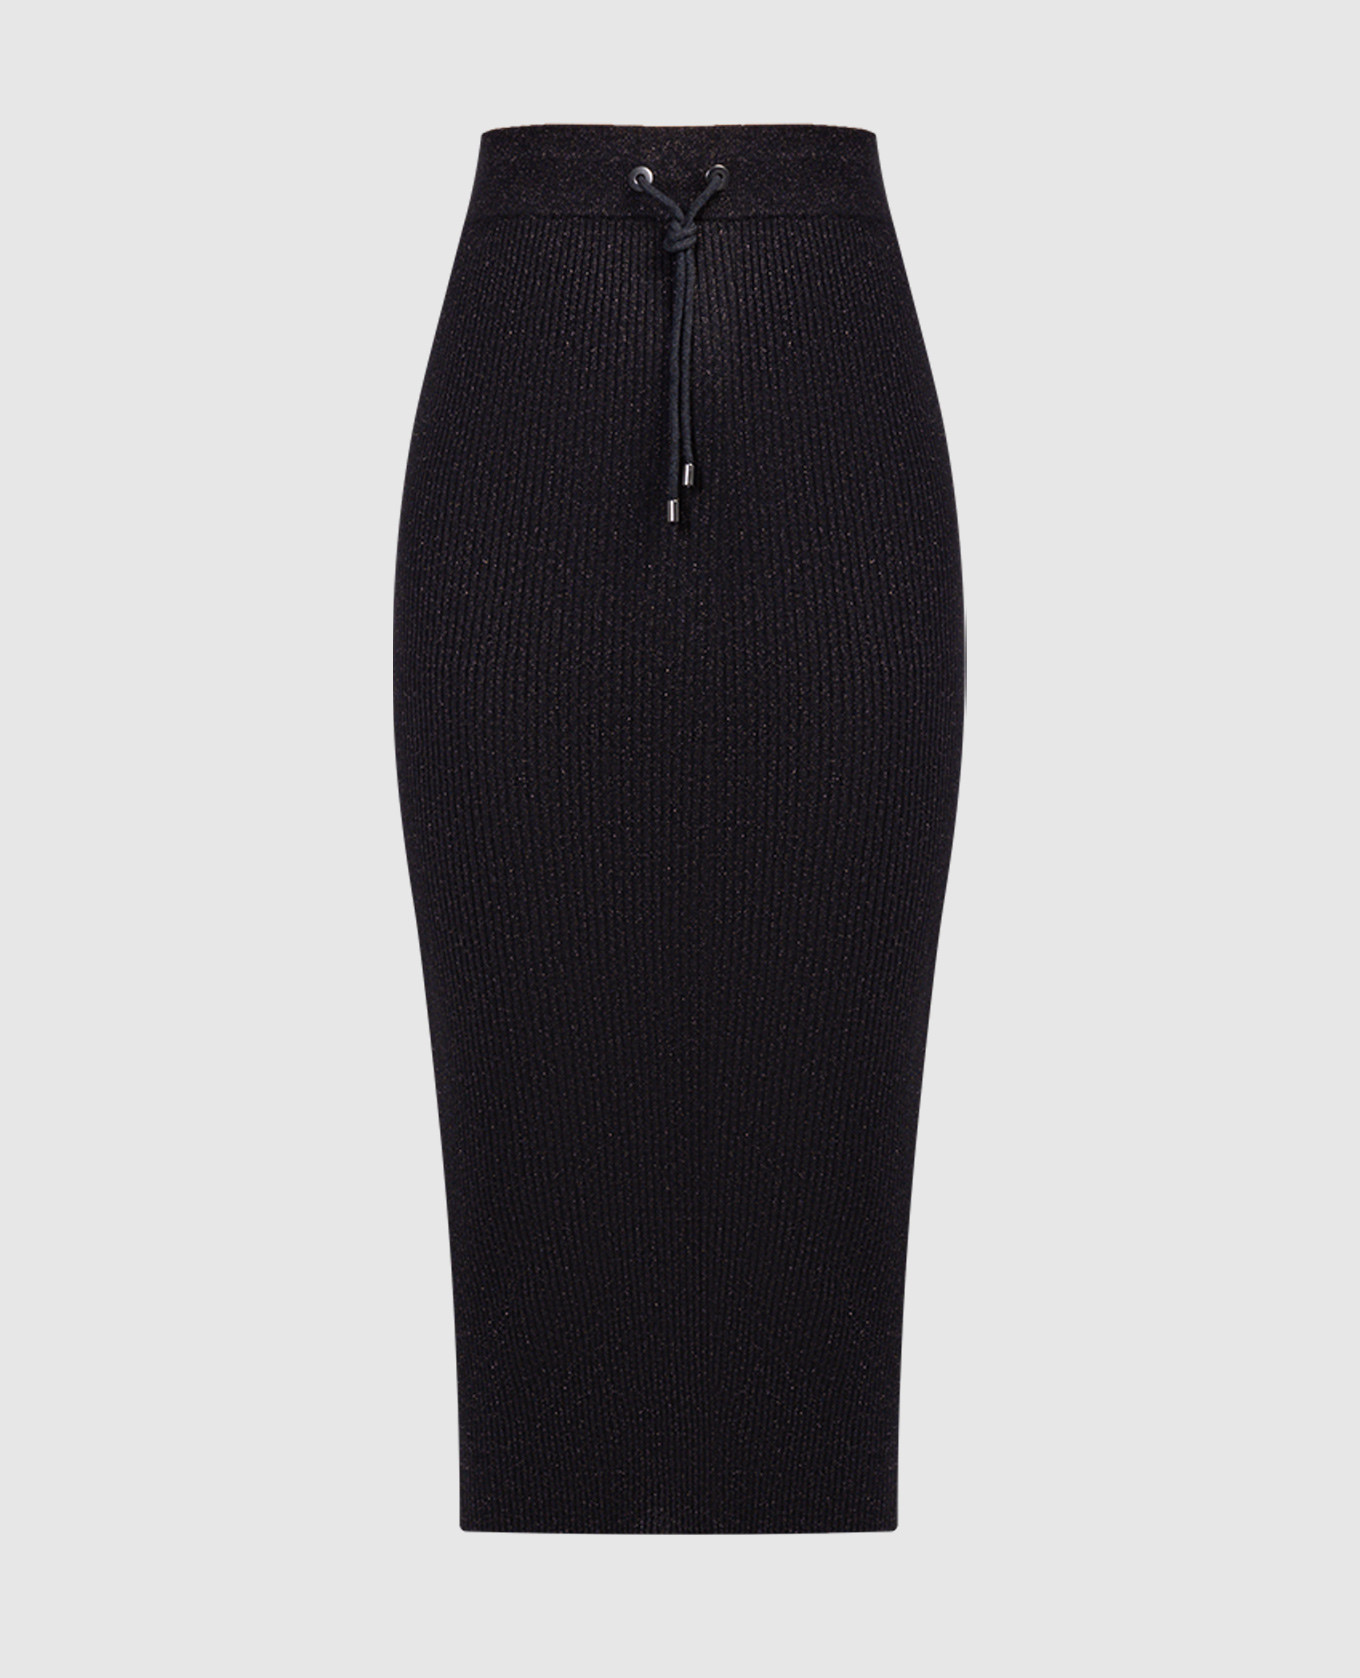 Black striped skirt with lurex